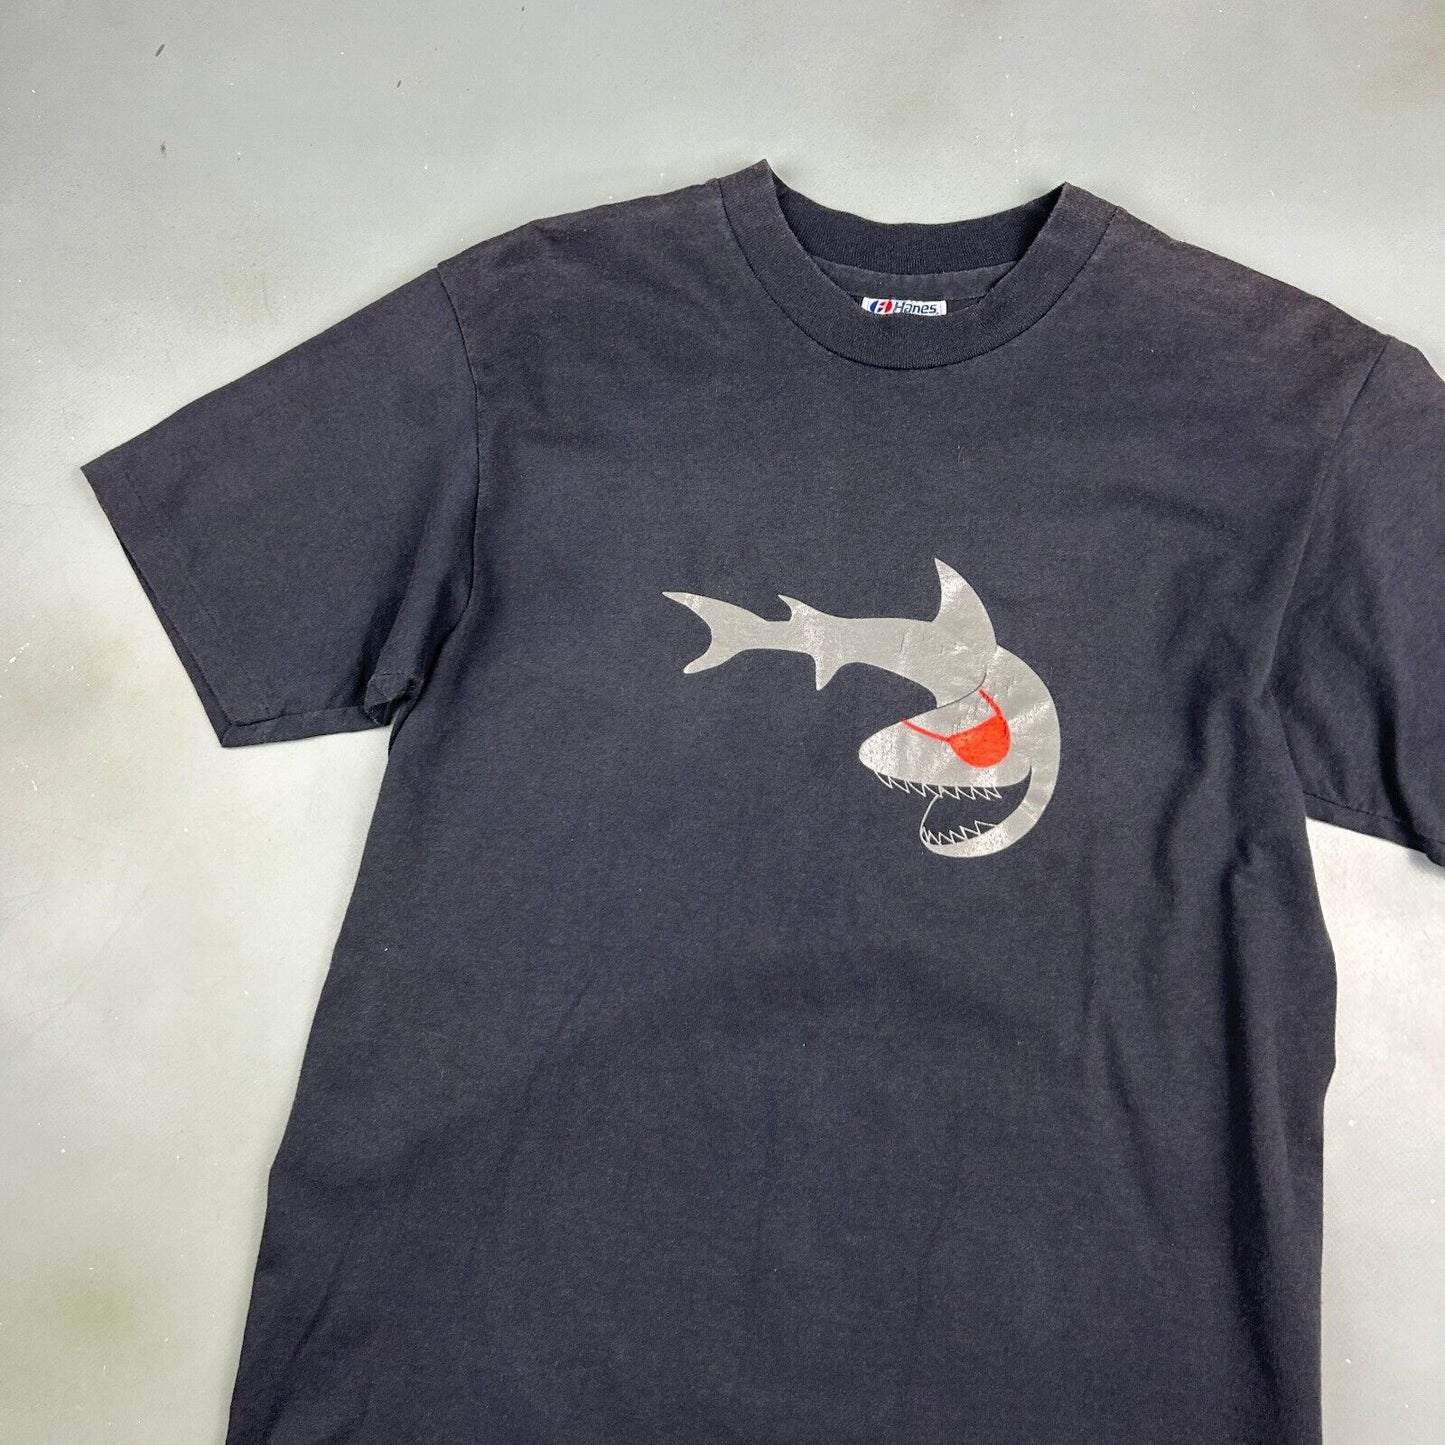 VINTAGE 1991 | Dead Eye Dicks Shark Island Black T-Shirt sz S-M Adult